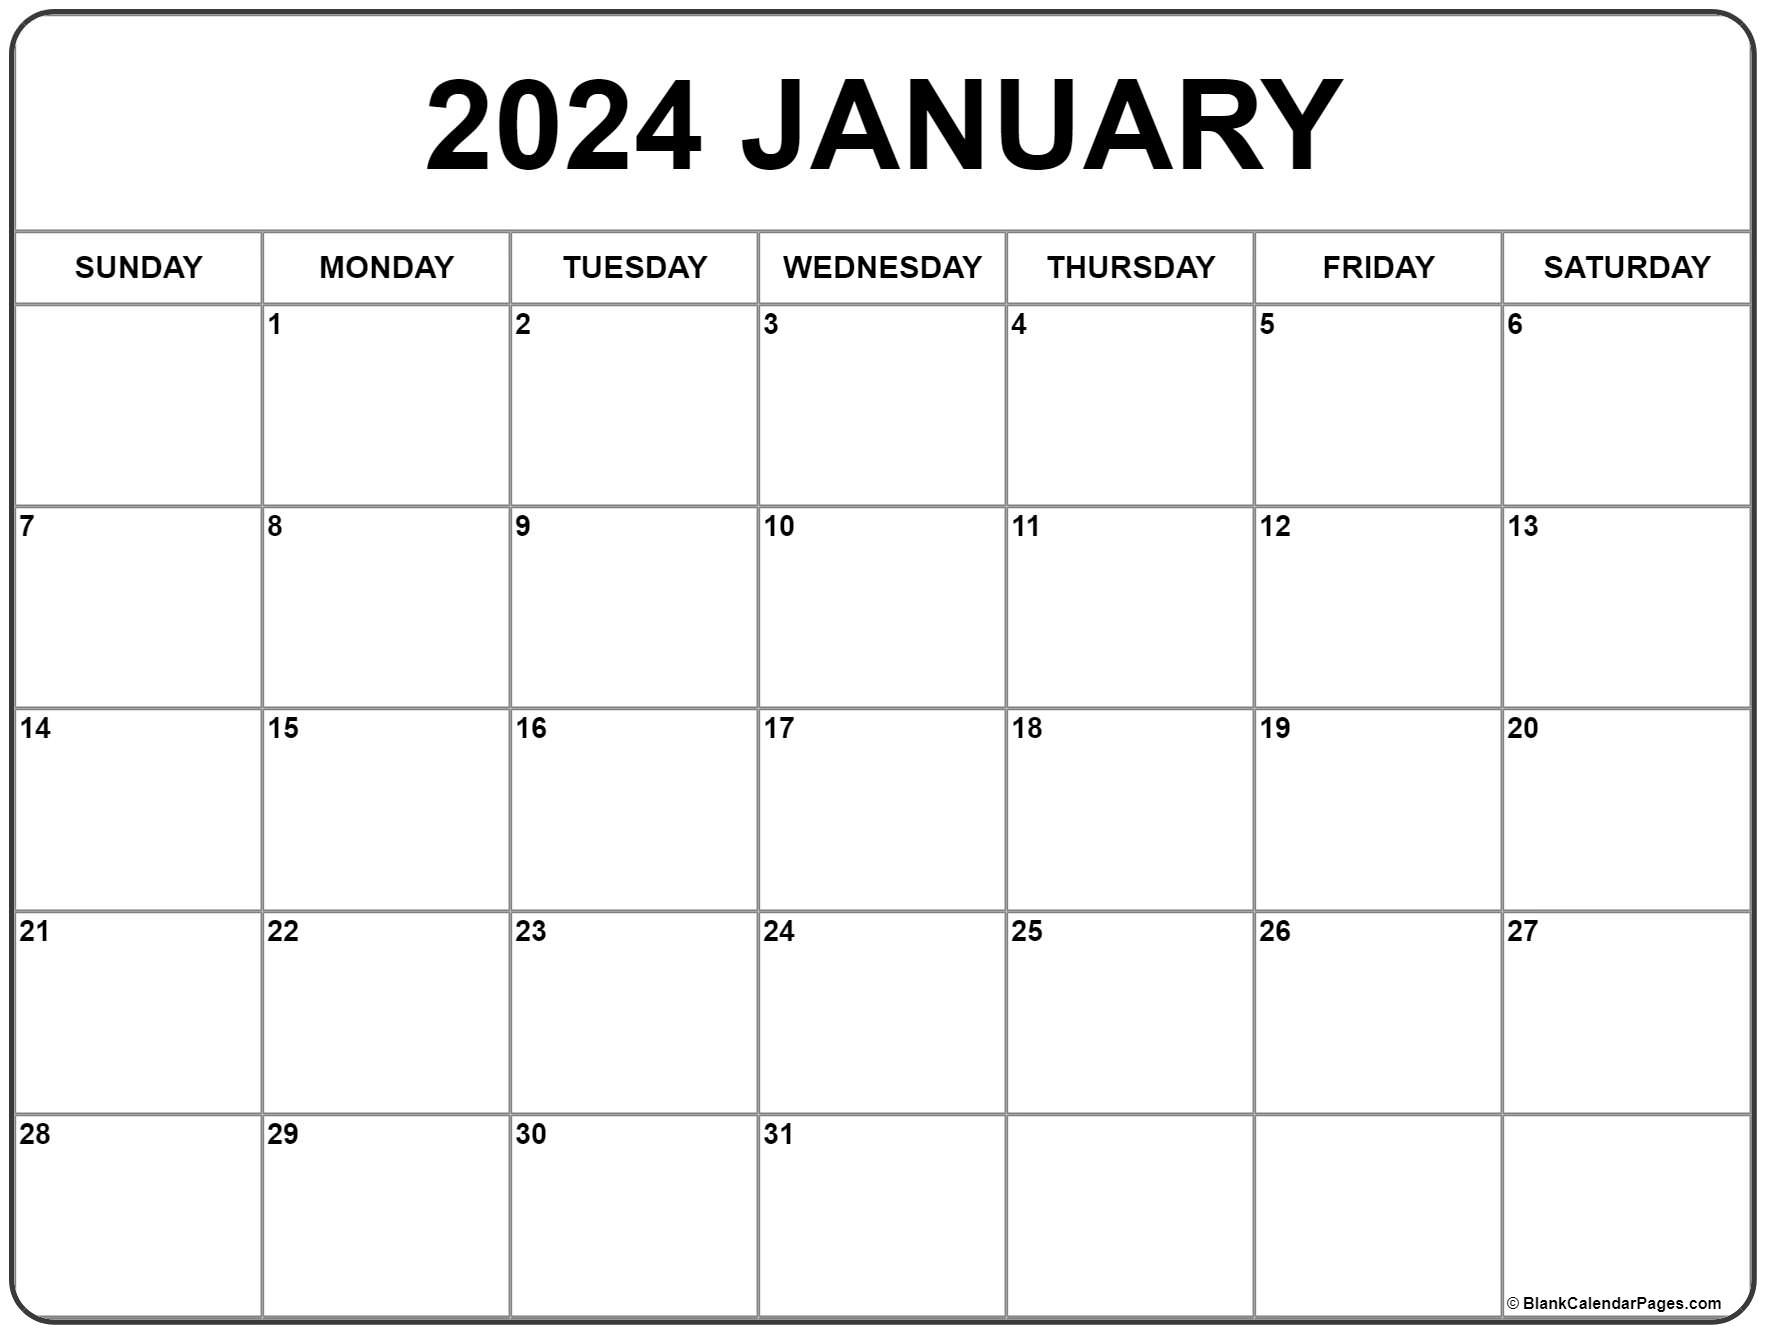 January 2024 Calendar | Free Printable Calendar for Printable Blank Calendar January 2024